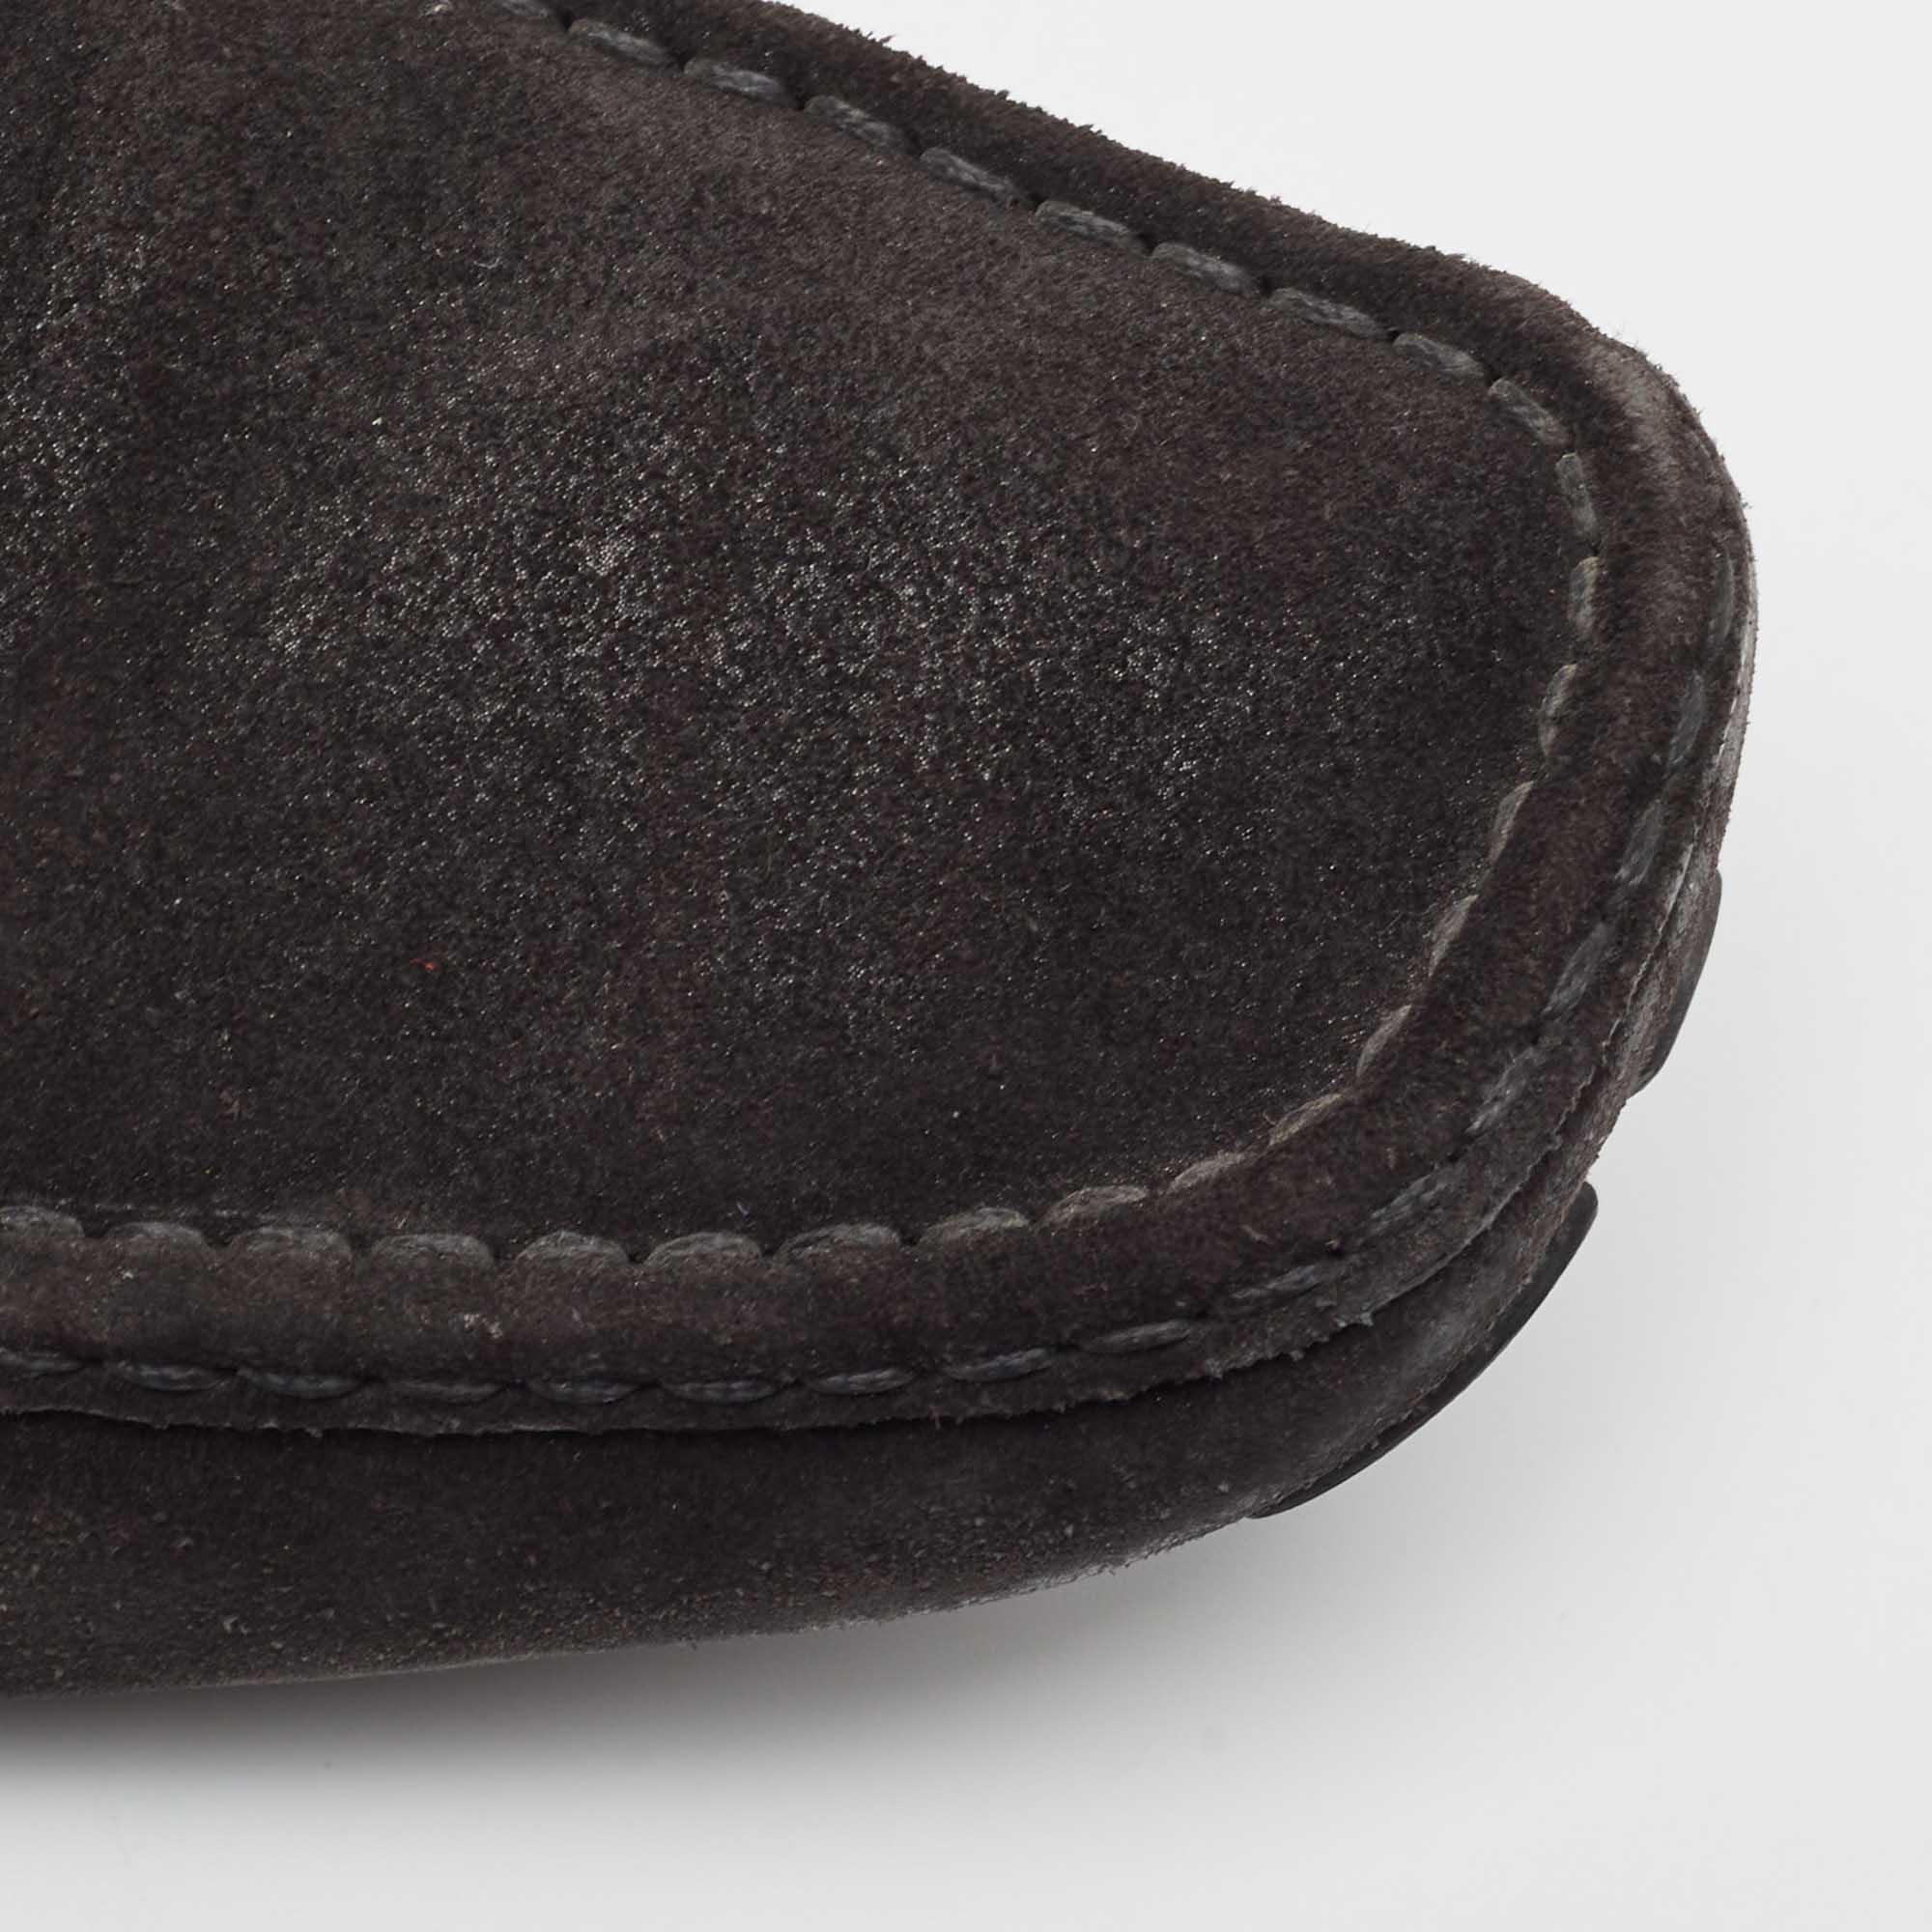 Louis Vuitton Black Suede Monte Carlo Loafers Size 44